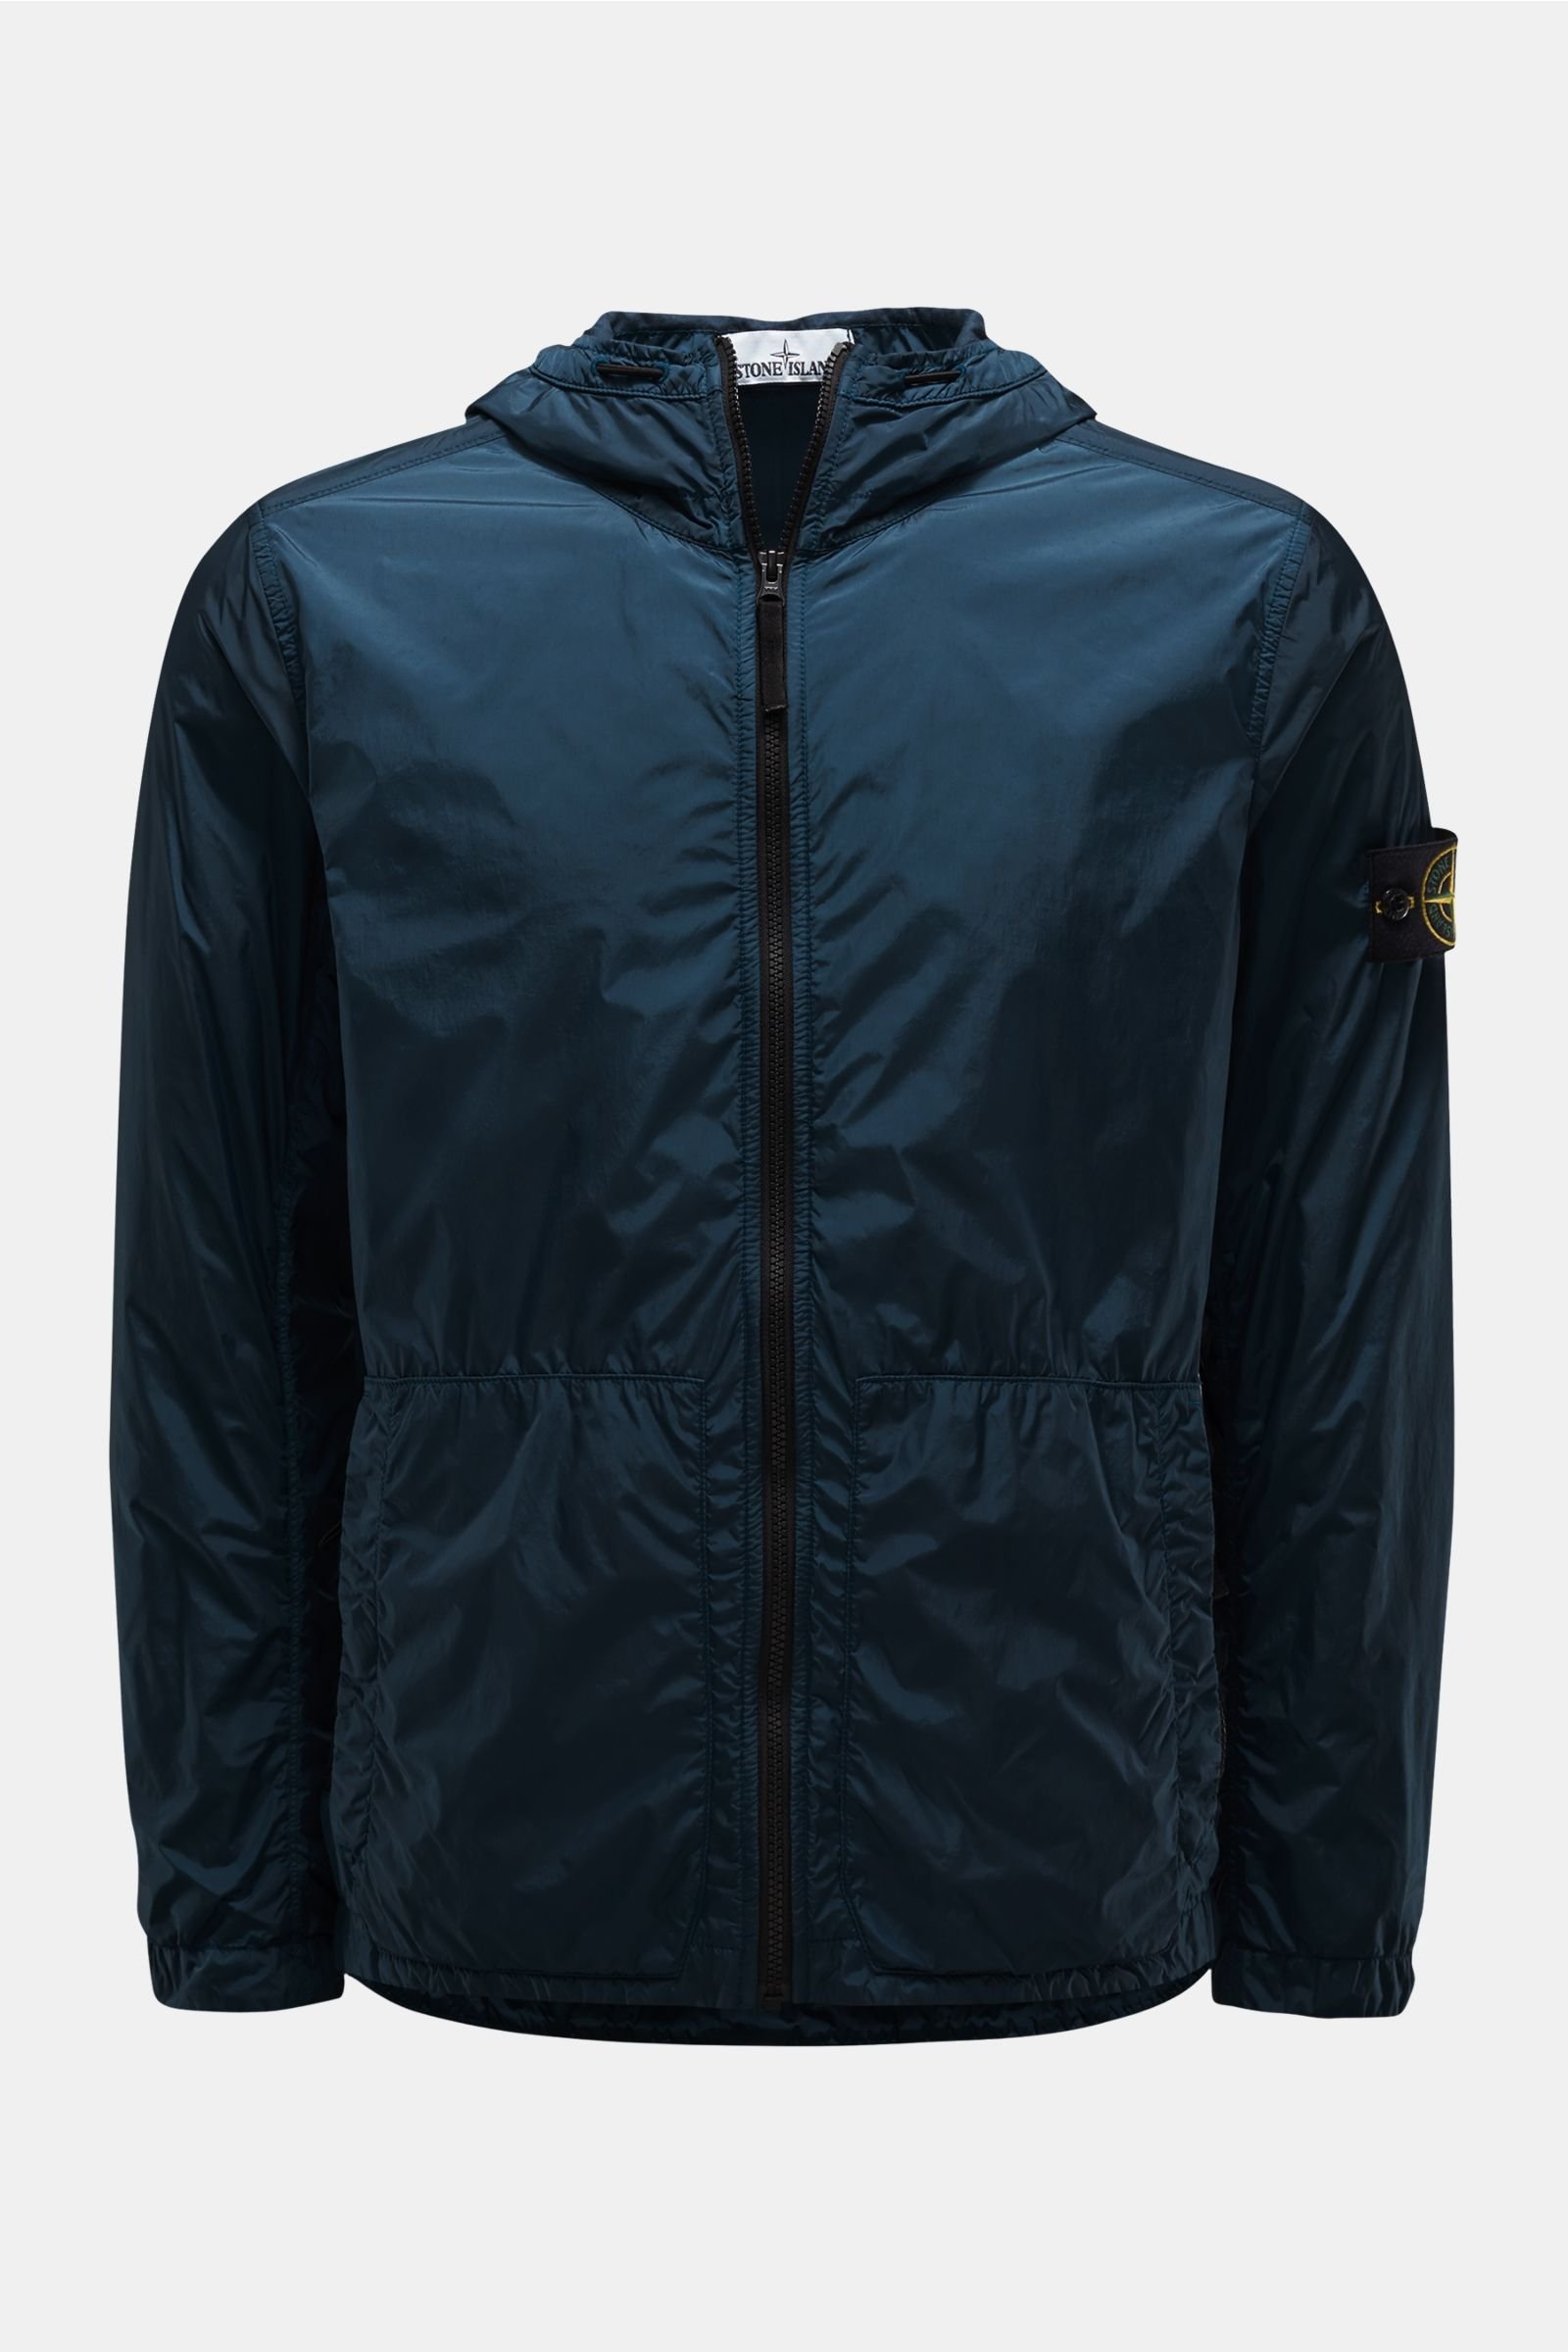 Jacket 'Garment Dyed Crinkle Reps NY' dark blue